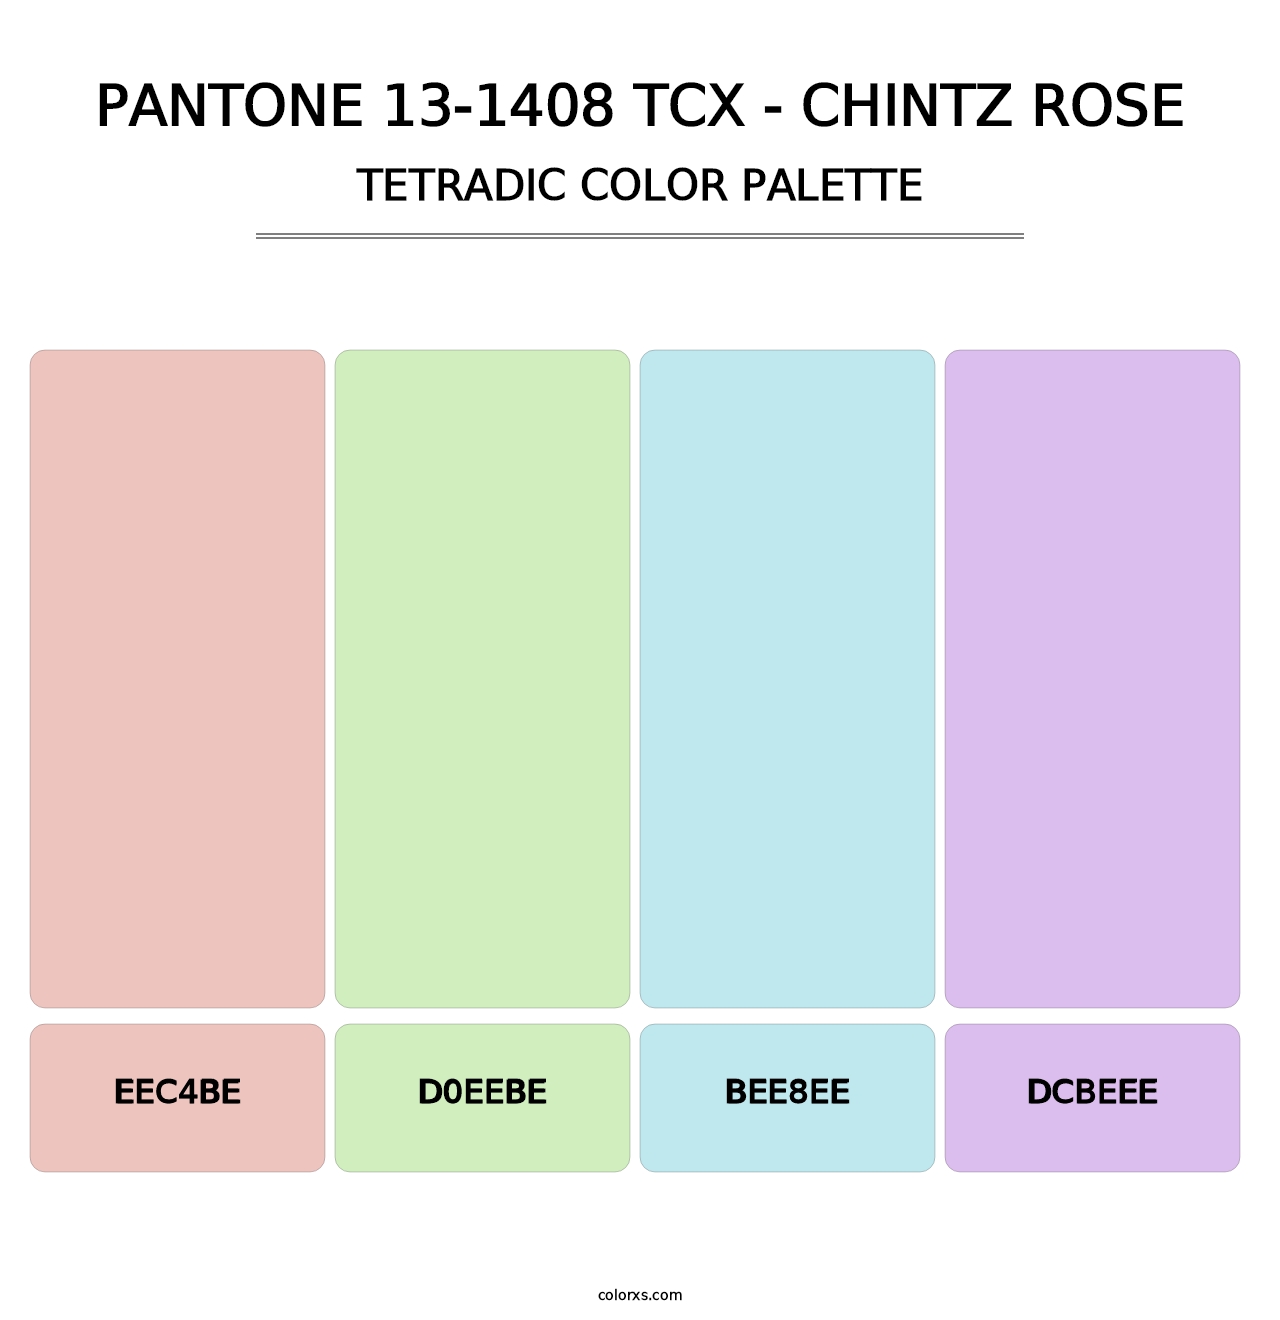 PANTONE 13-1408 TCX - Chintz Rose - Tetradic Color Palette